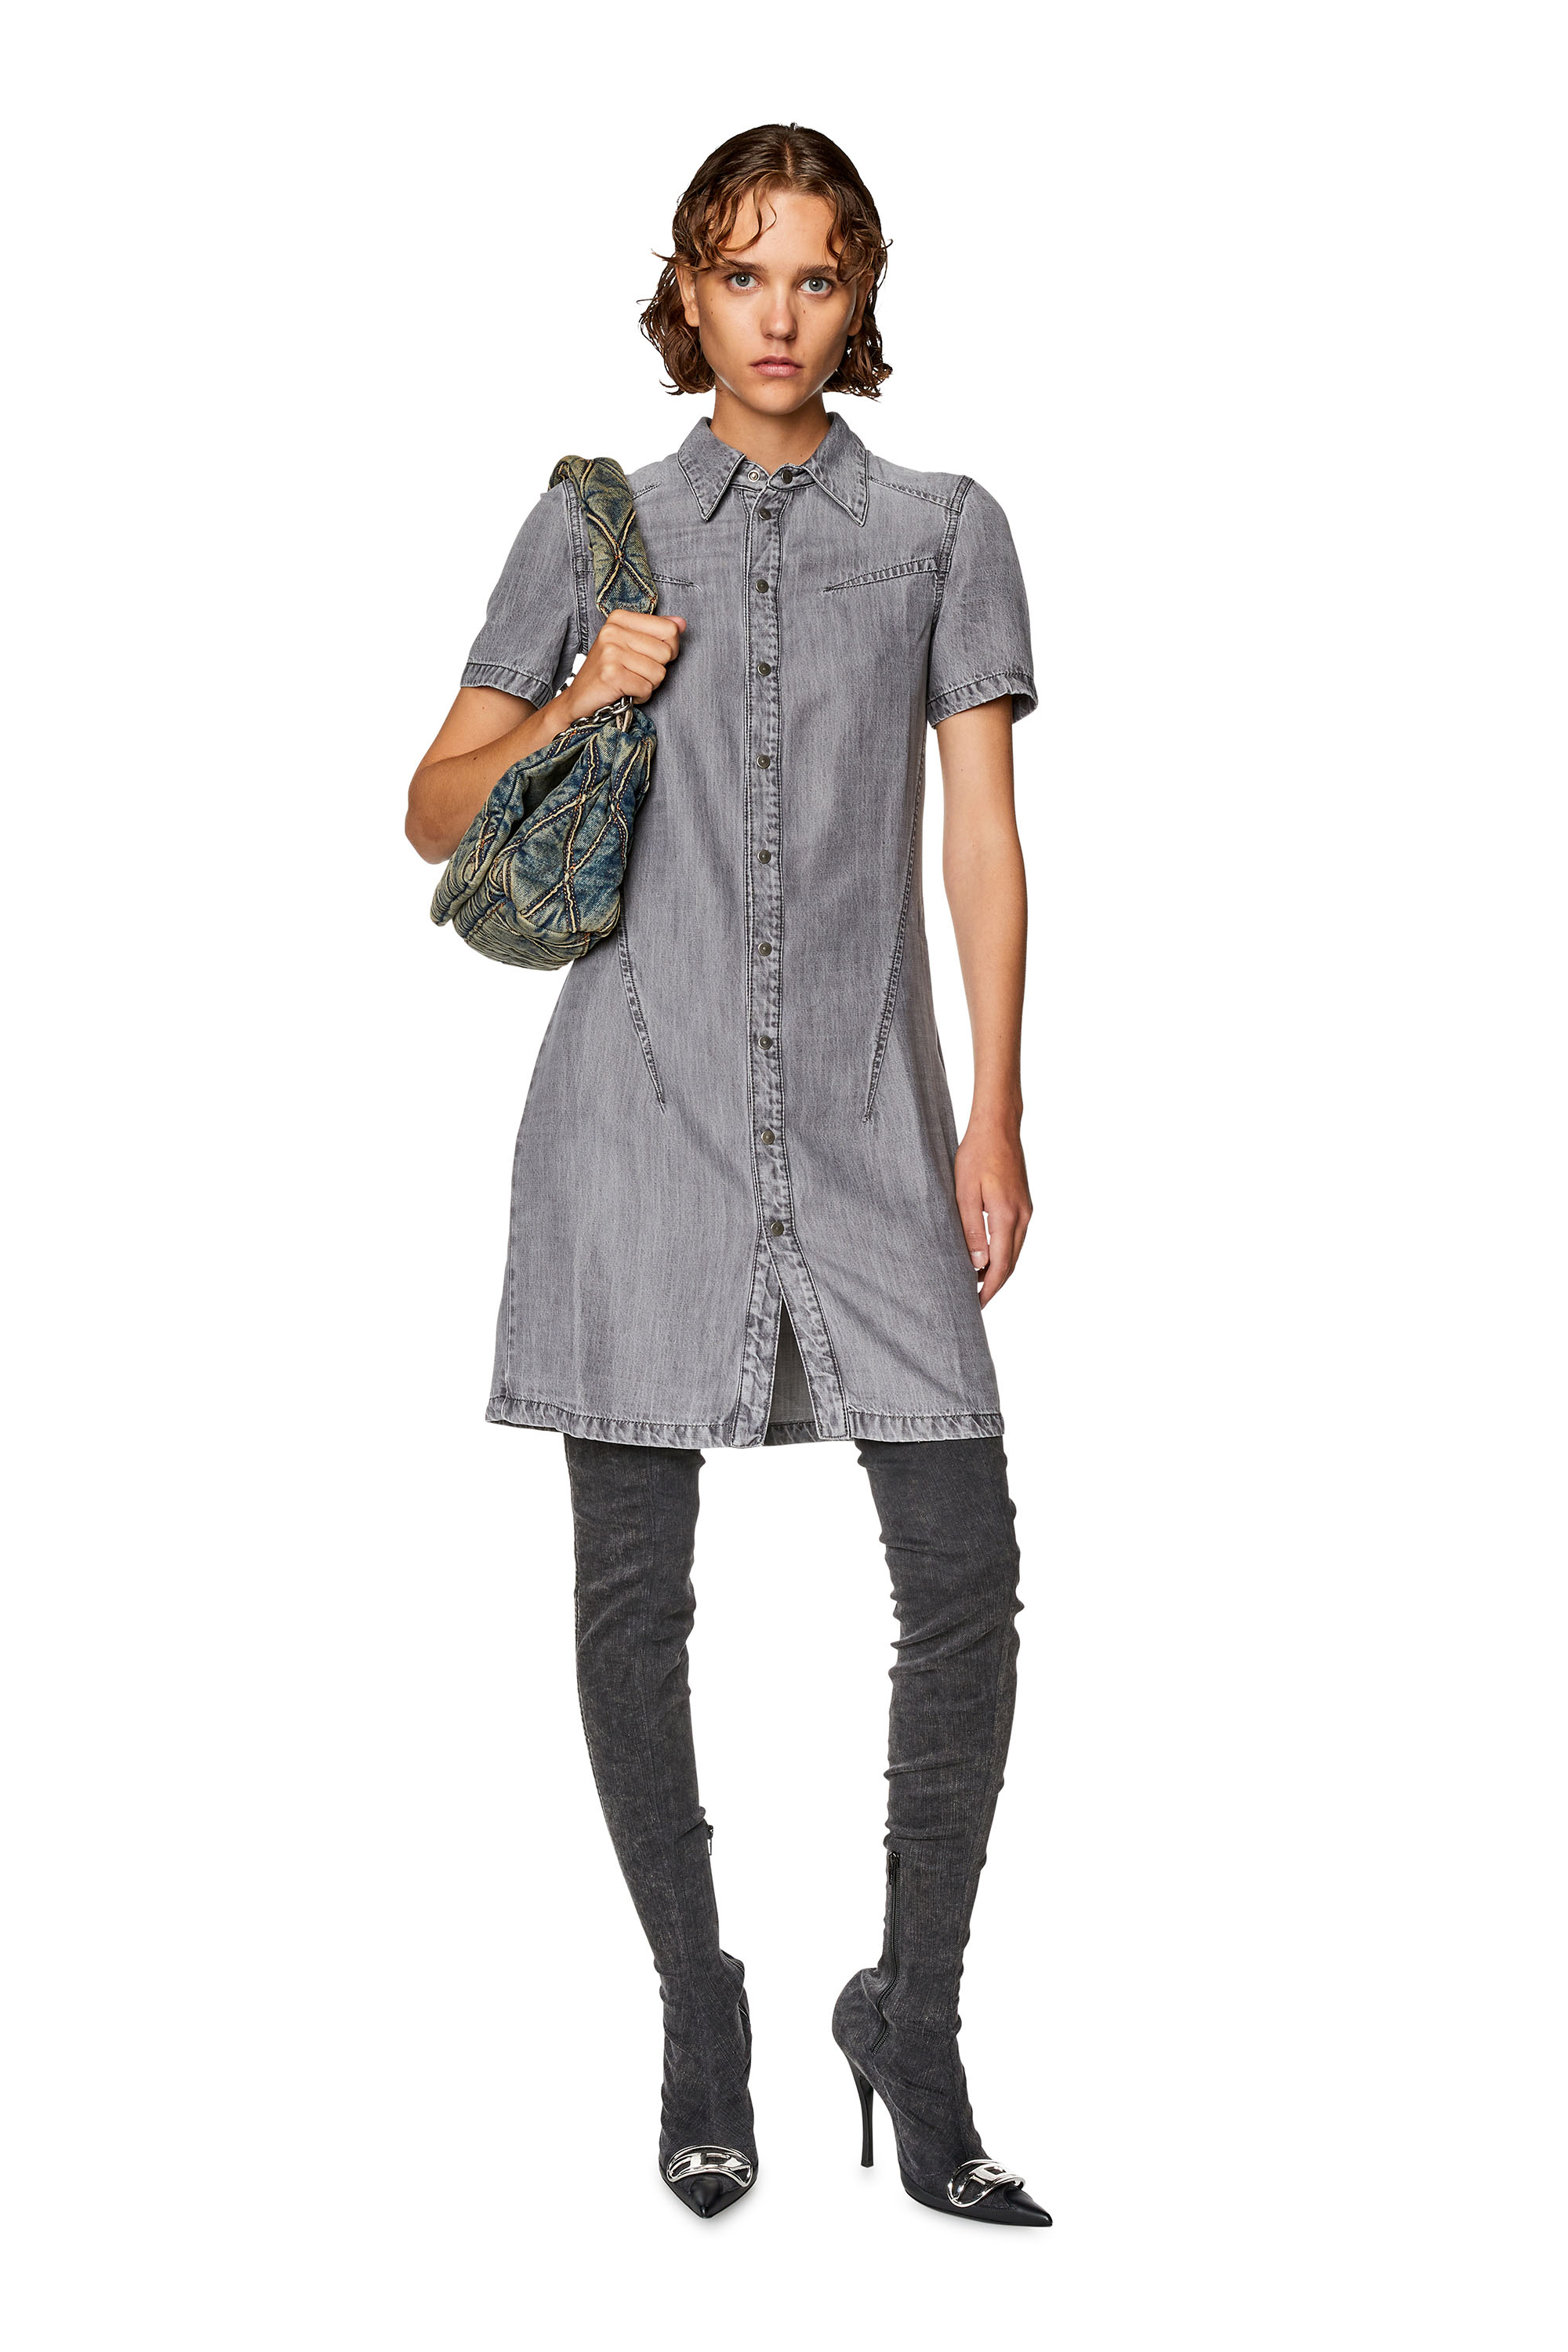 Diesel - DE-SHIRTY, Woman Buttoned shirt dress in light denim in Grey - Image 1